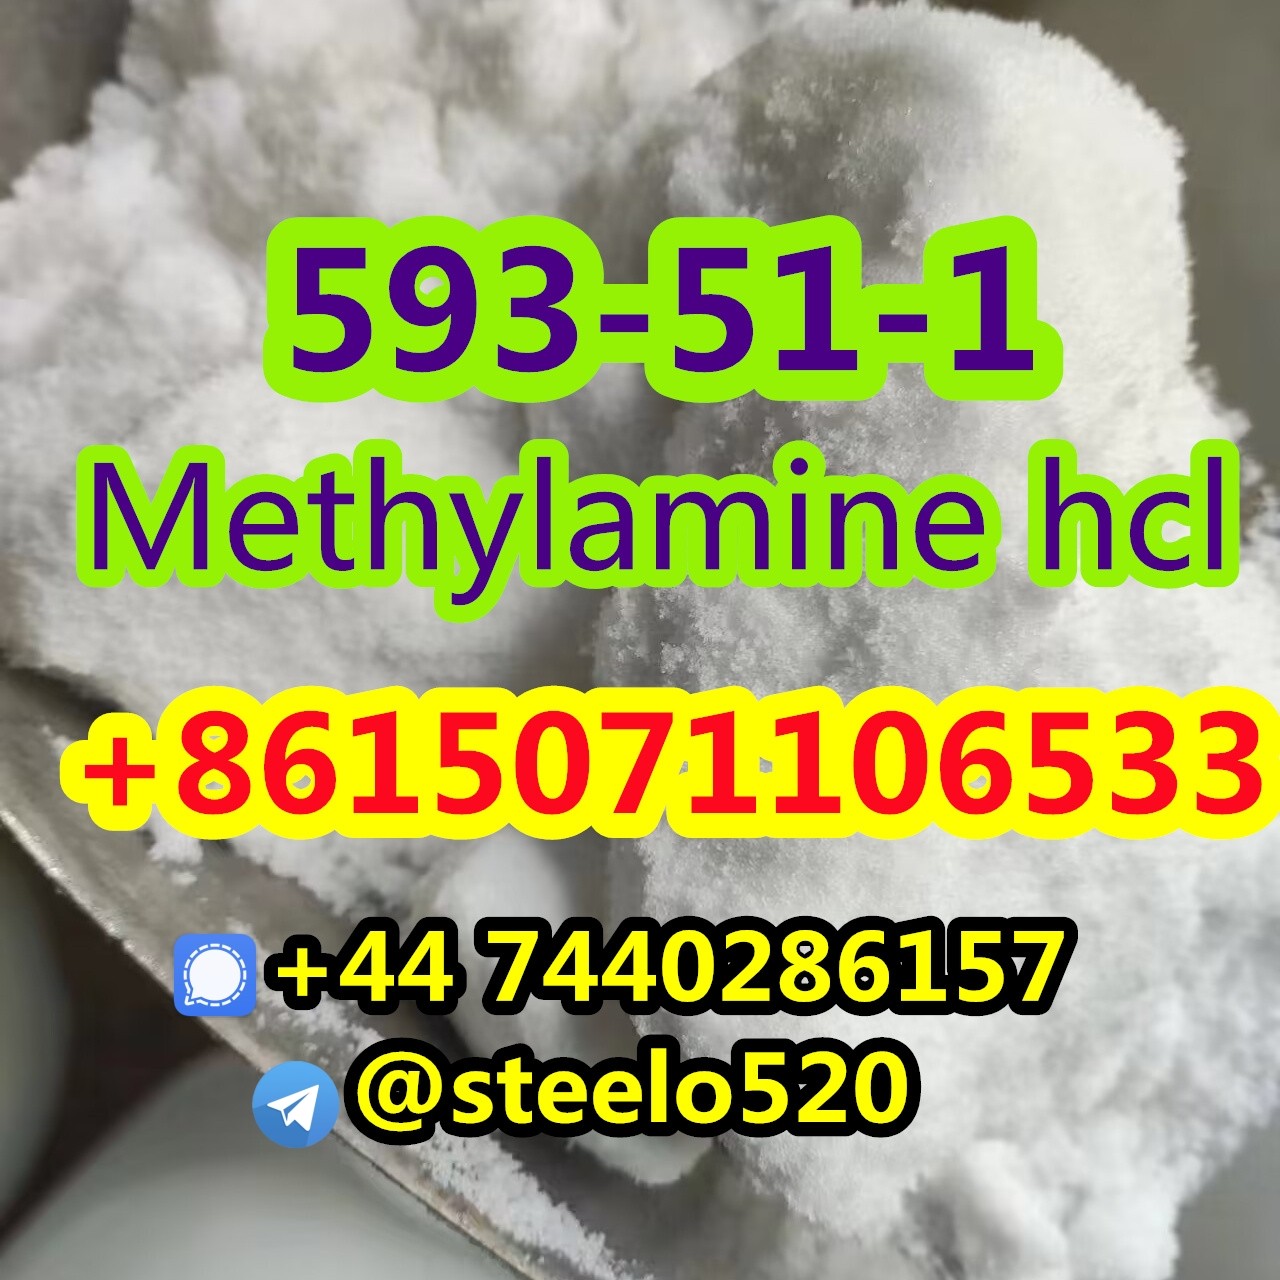 Hot in EU UK AUS Methylamine hcl cas 593-51-1